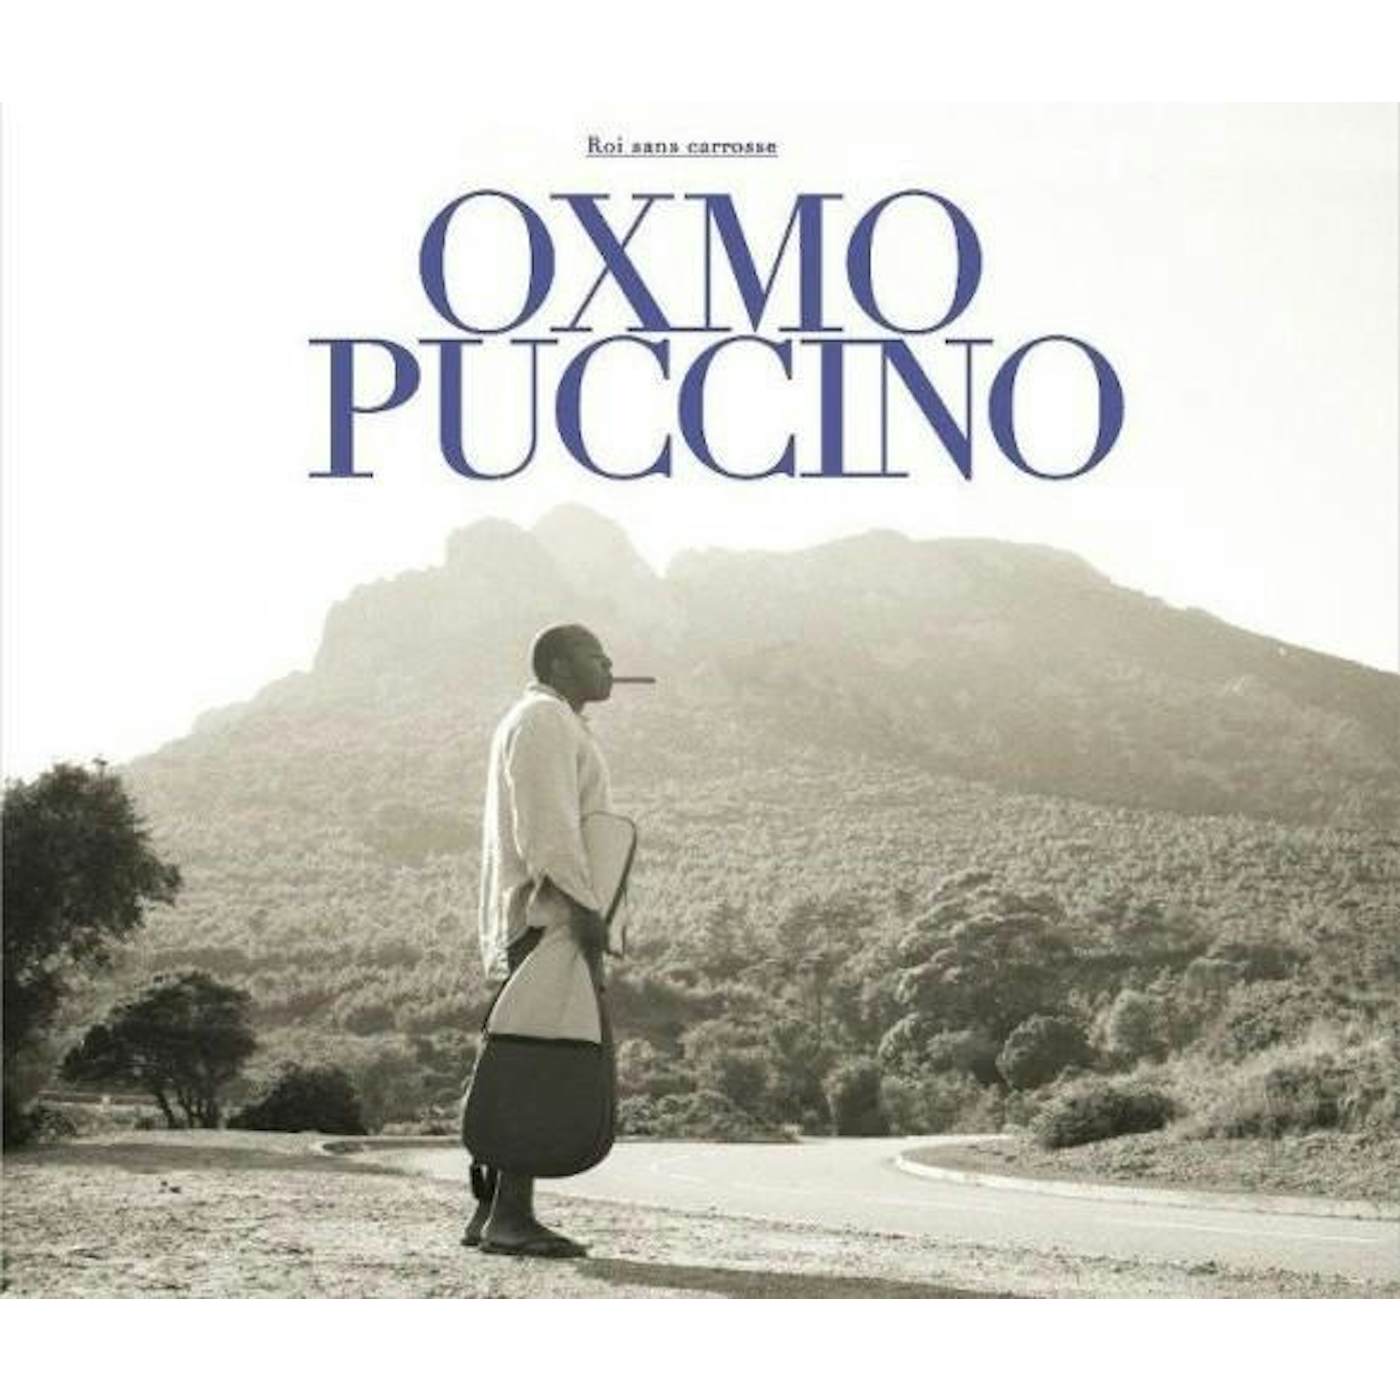 Oxmo Puccino ROI SANS CARROSSE CD